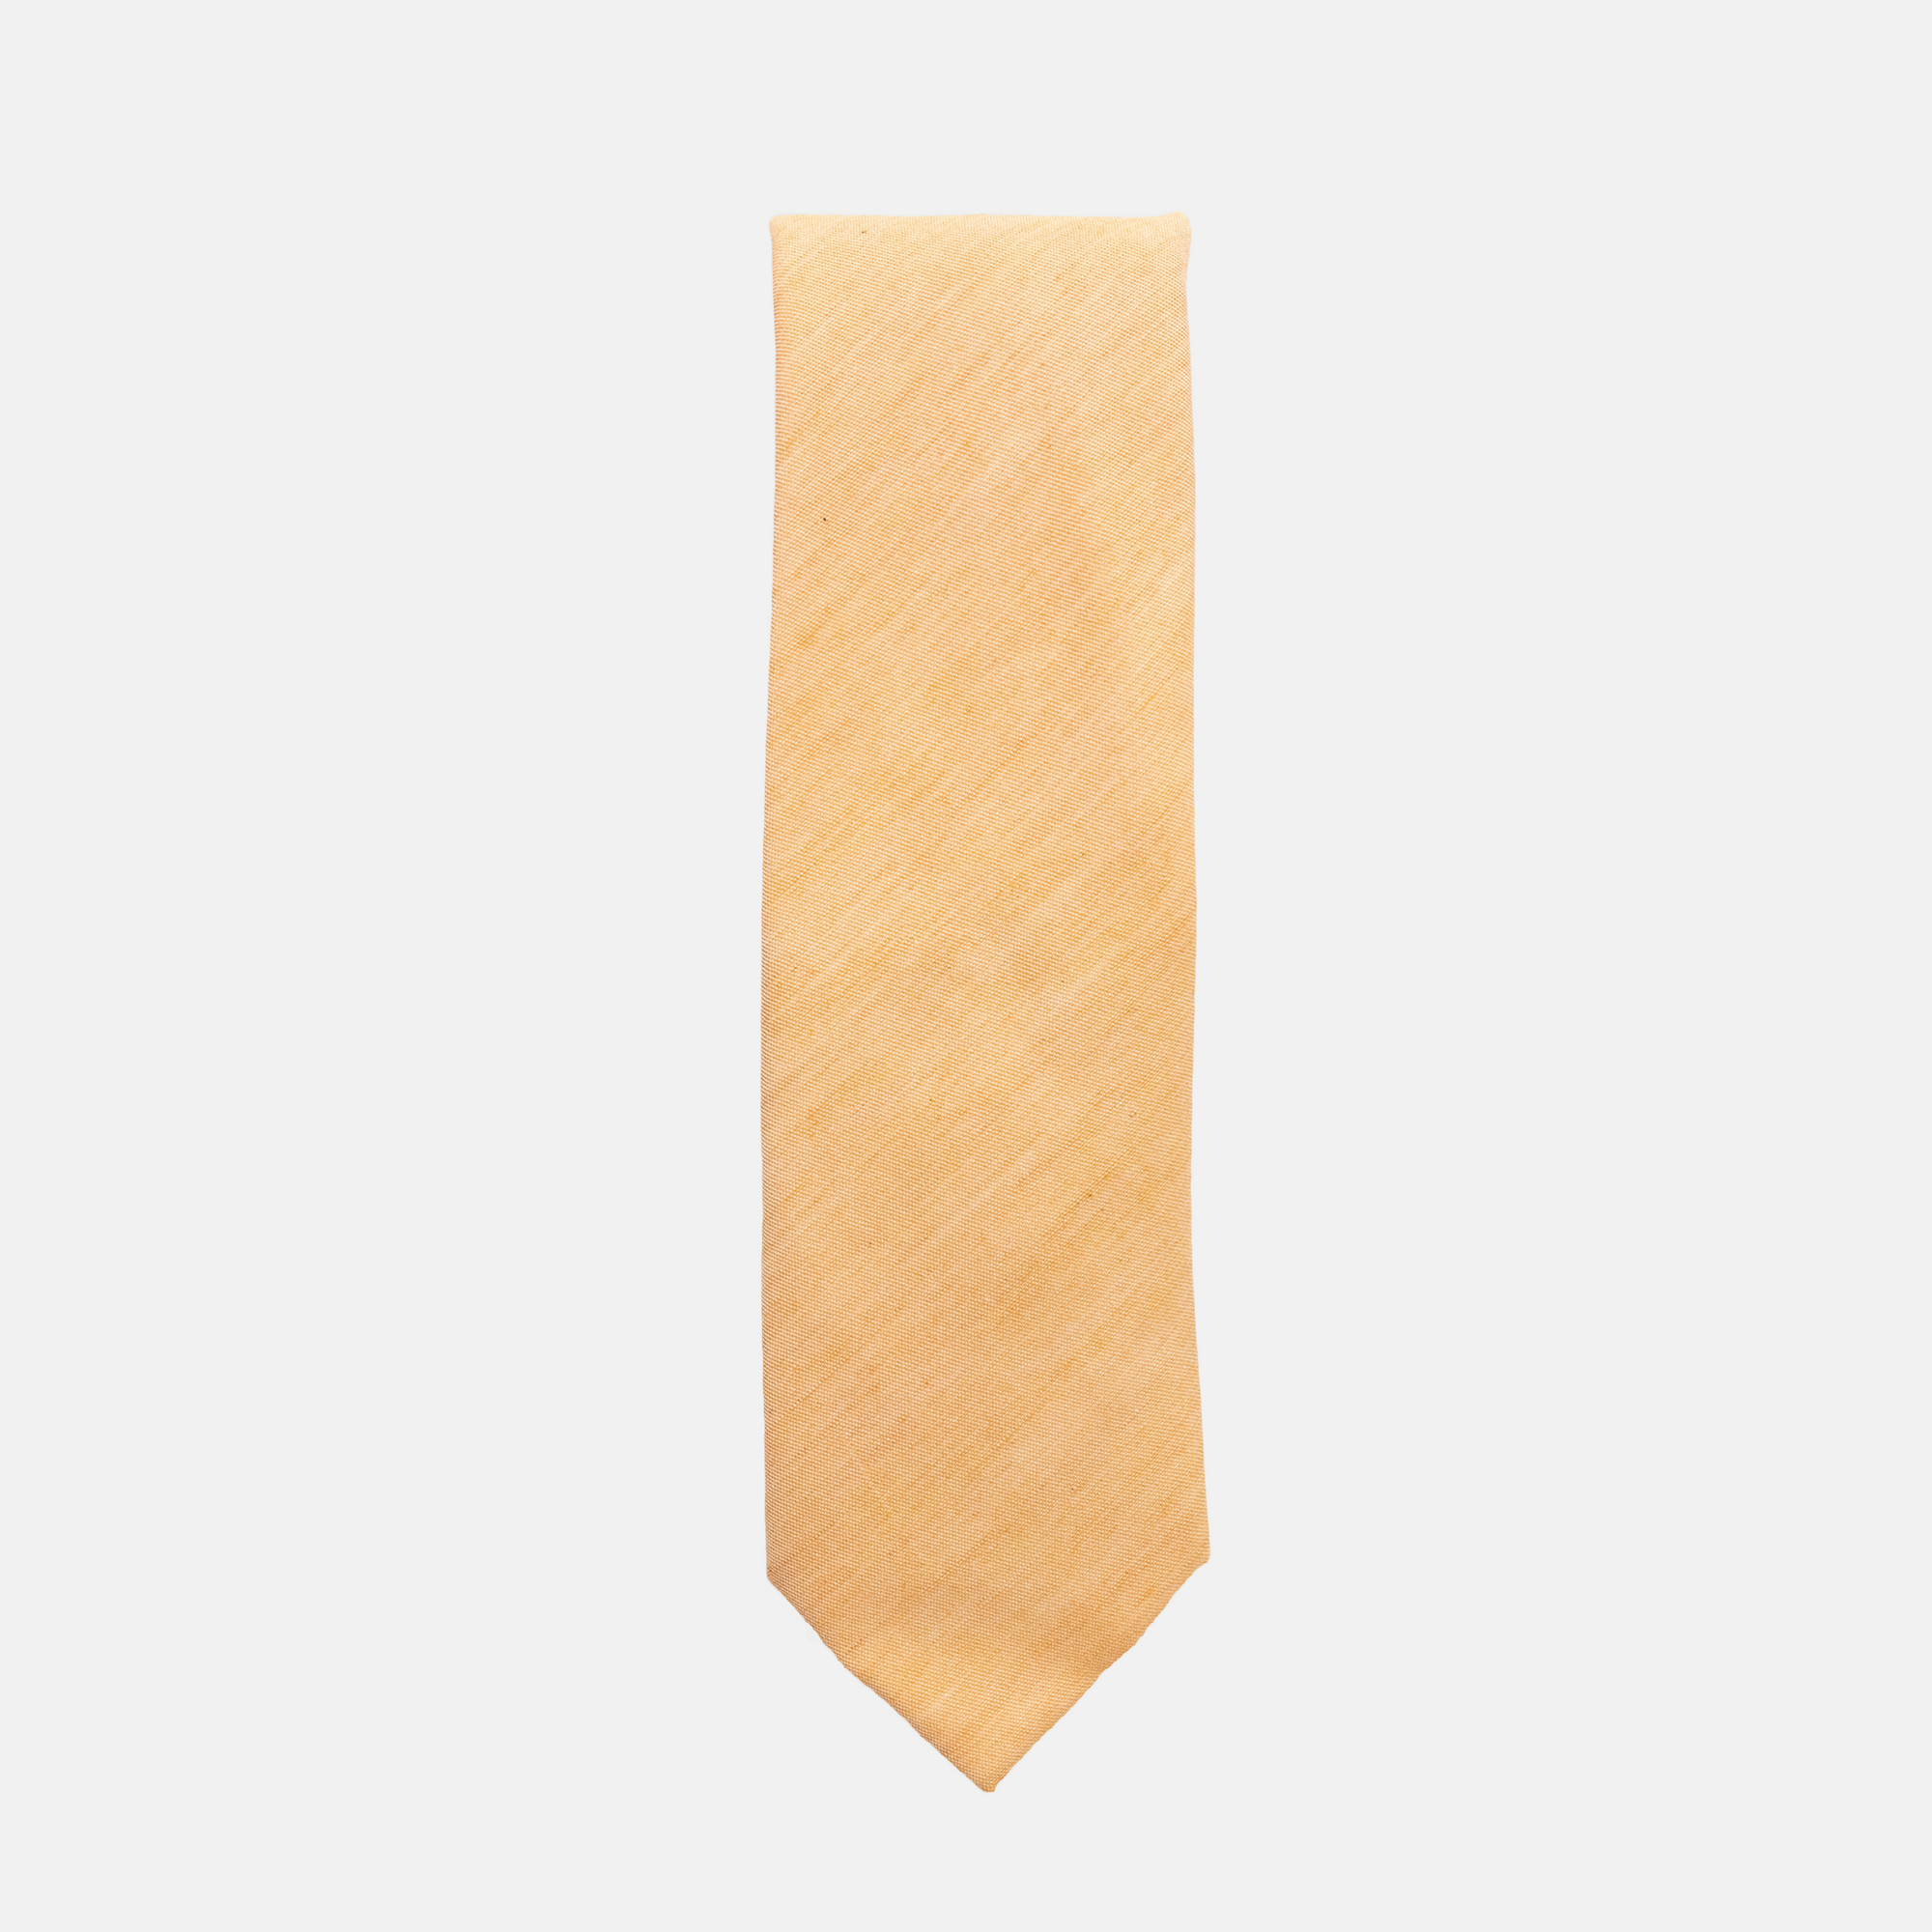 SAWYER - Men's Tie